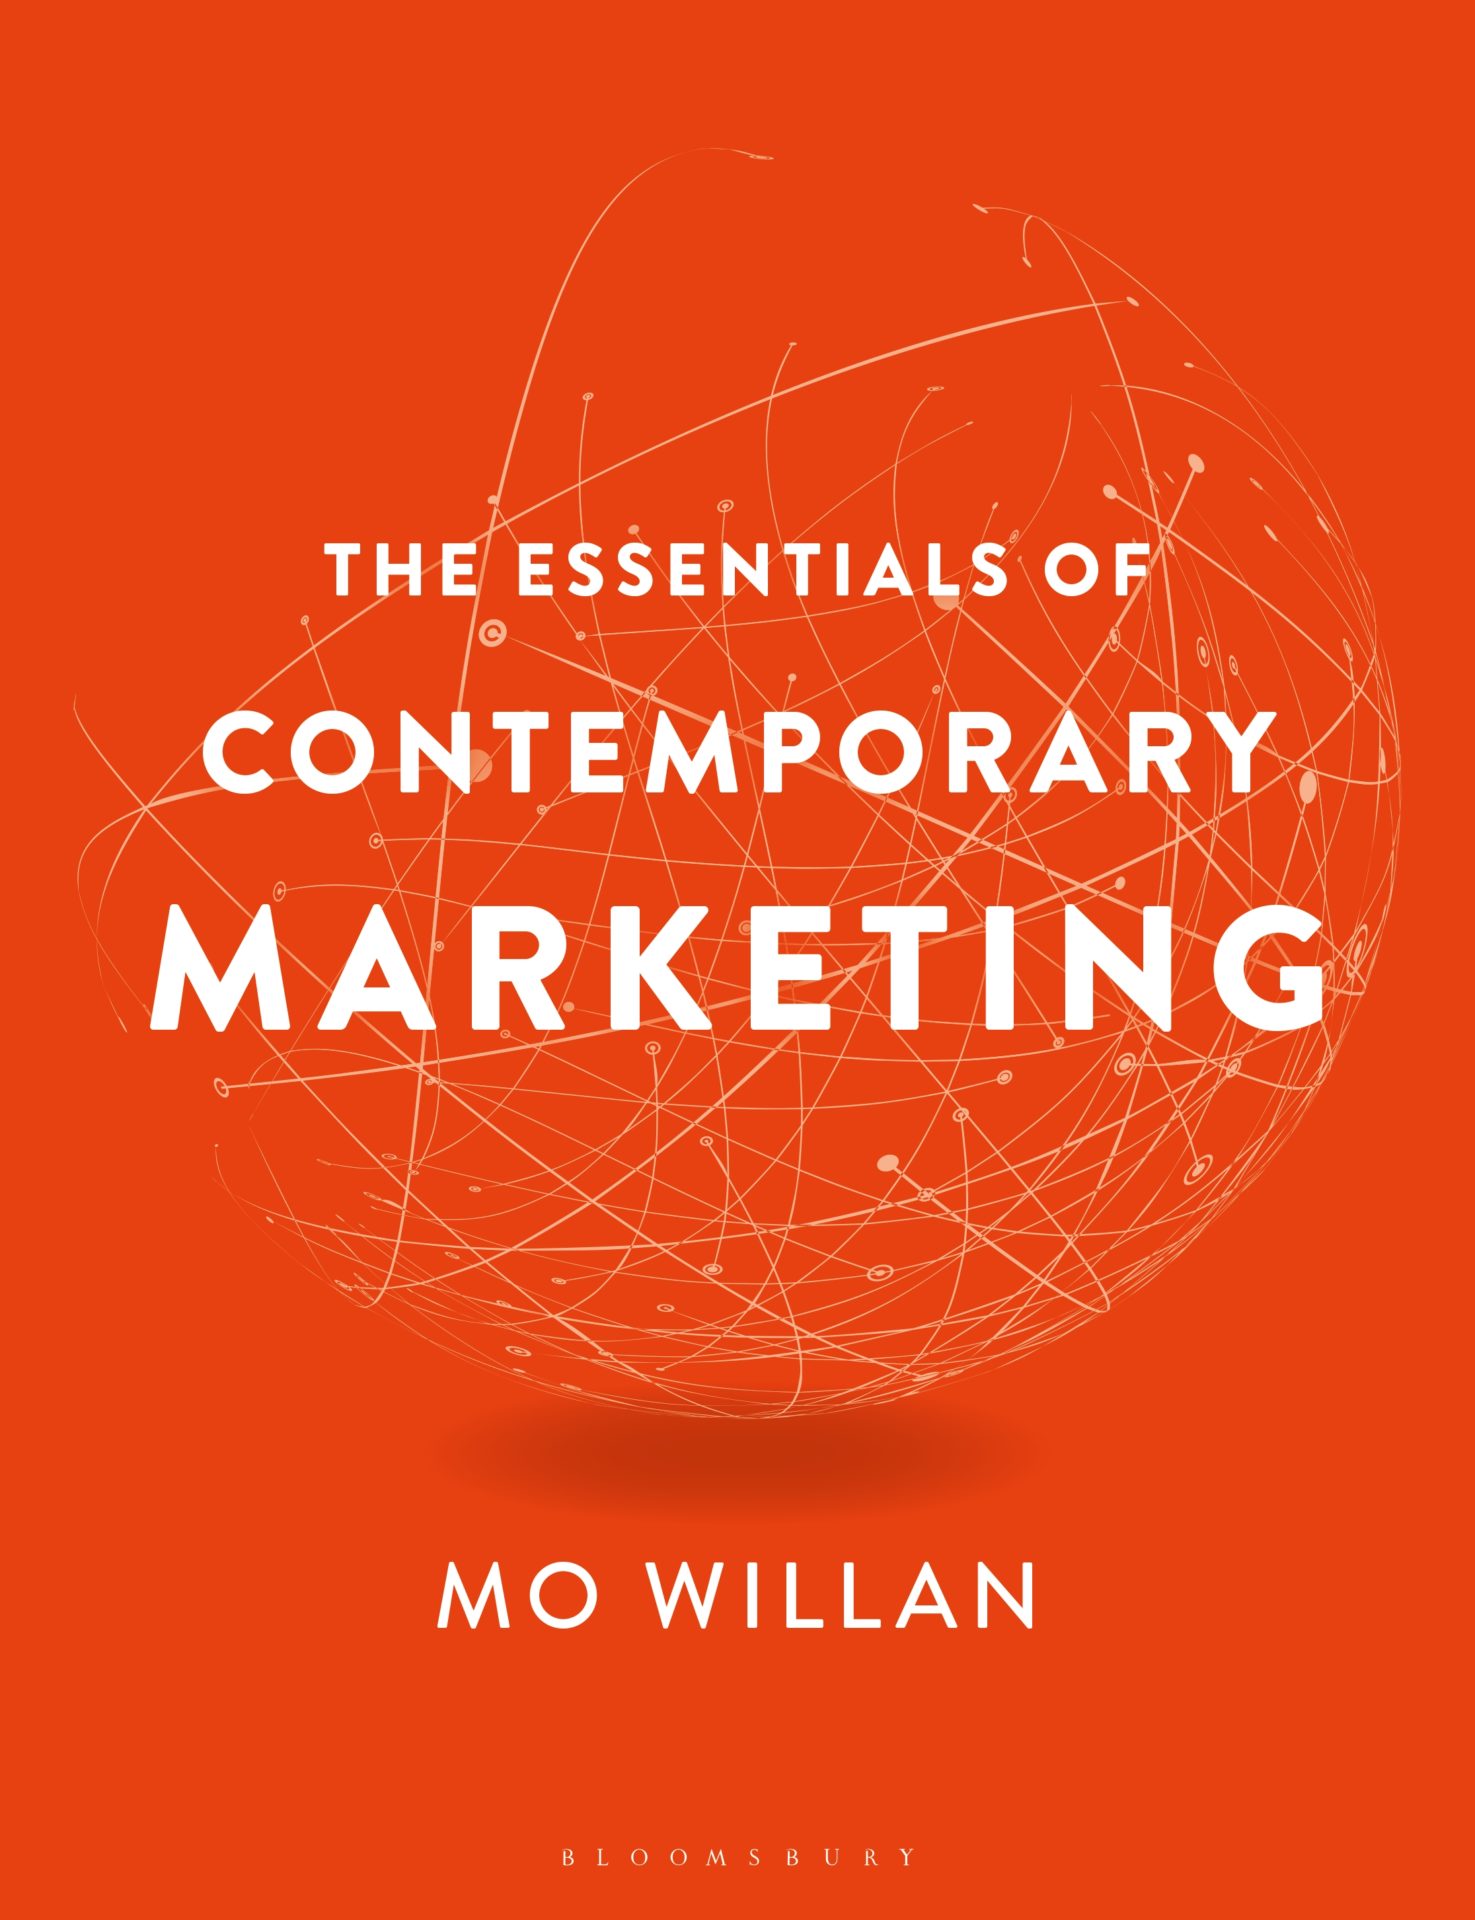 AMBA book club: The Essentials of Contemporary Marketing